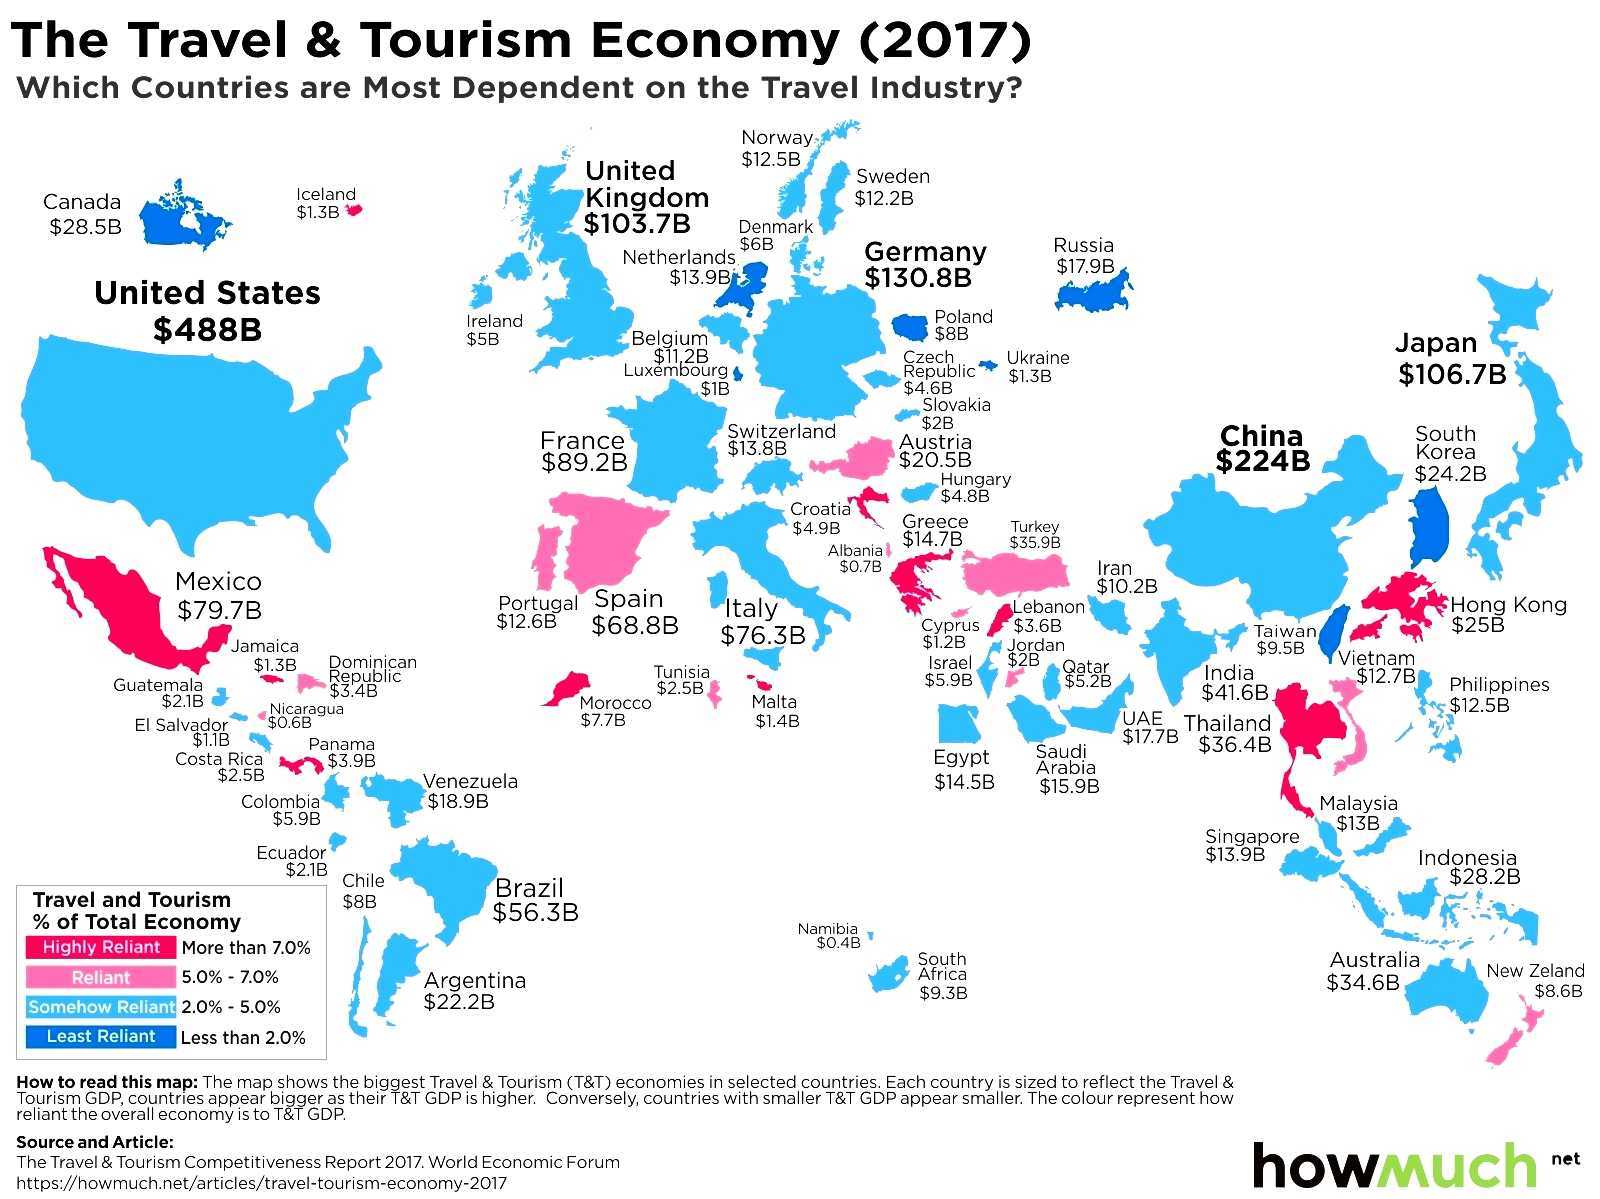 world tourism rankings